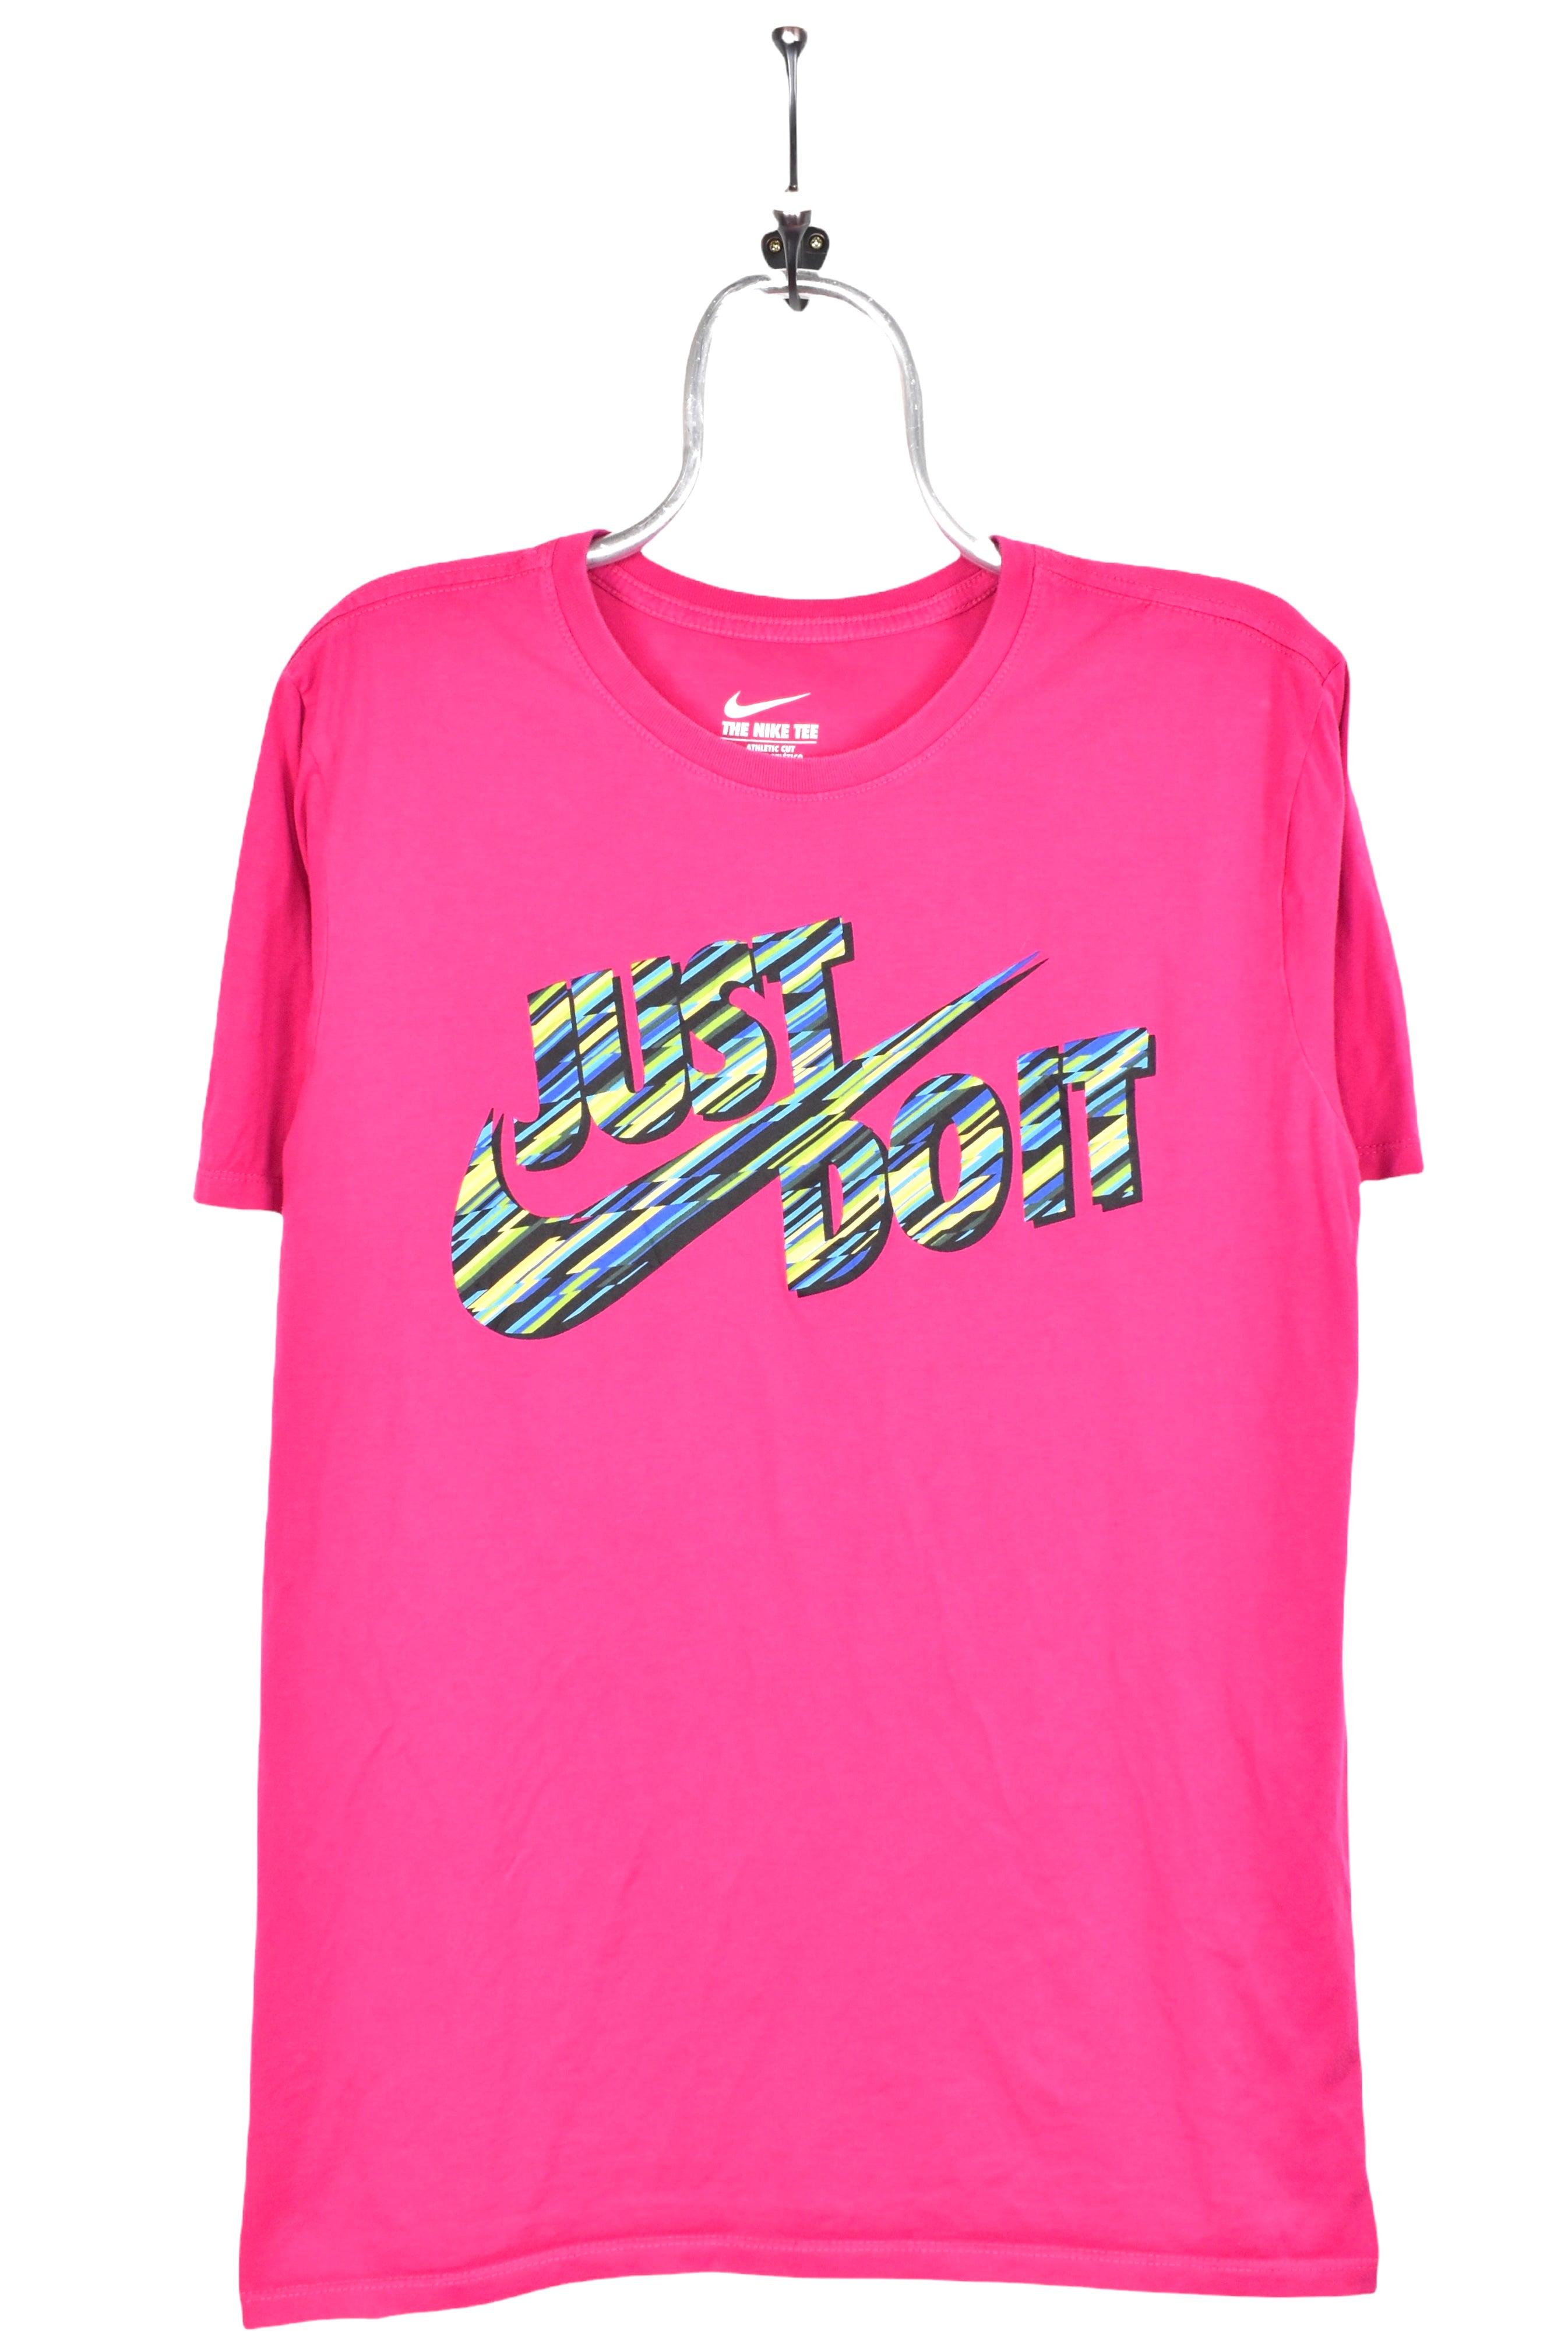 Women's modern Nike shirt, pink graphic tee - AU L NIKE